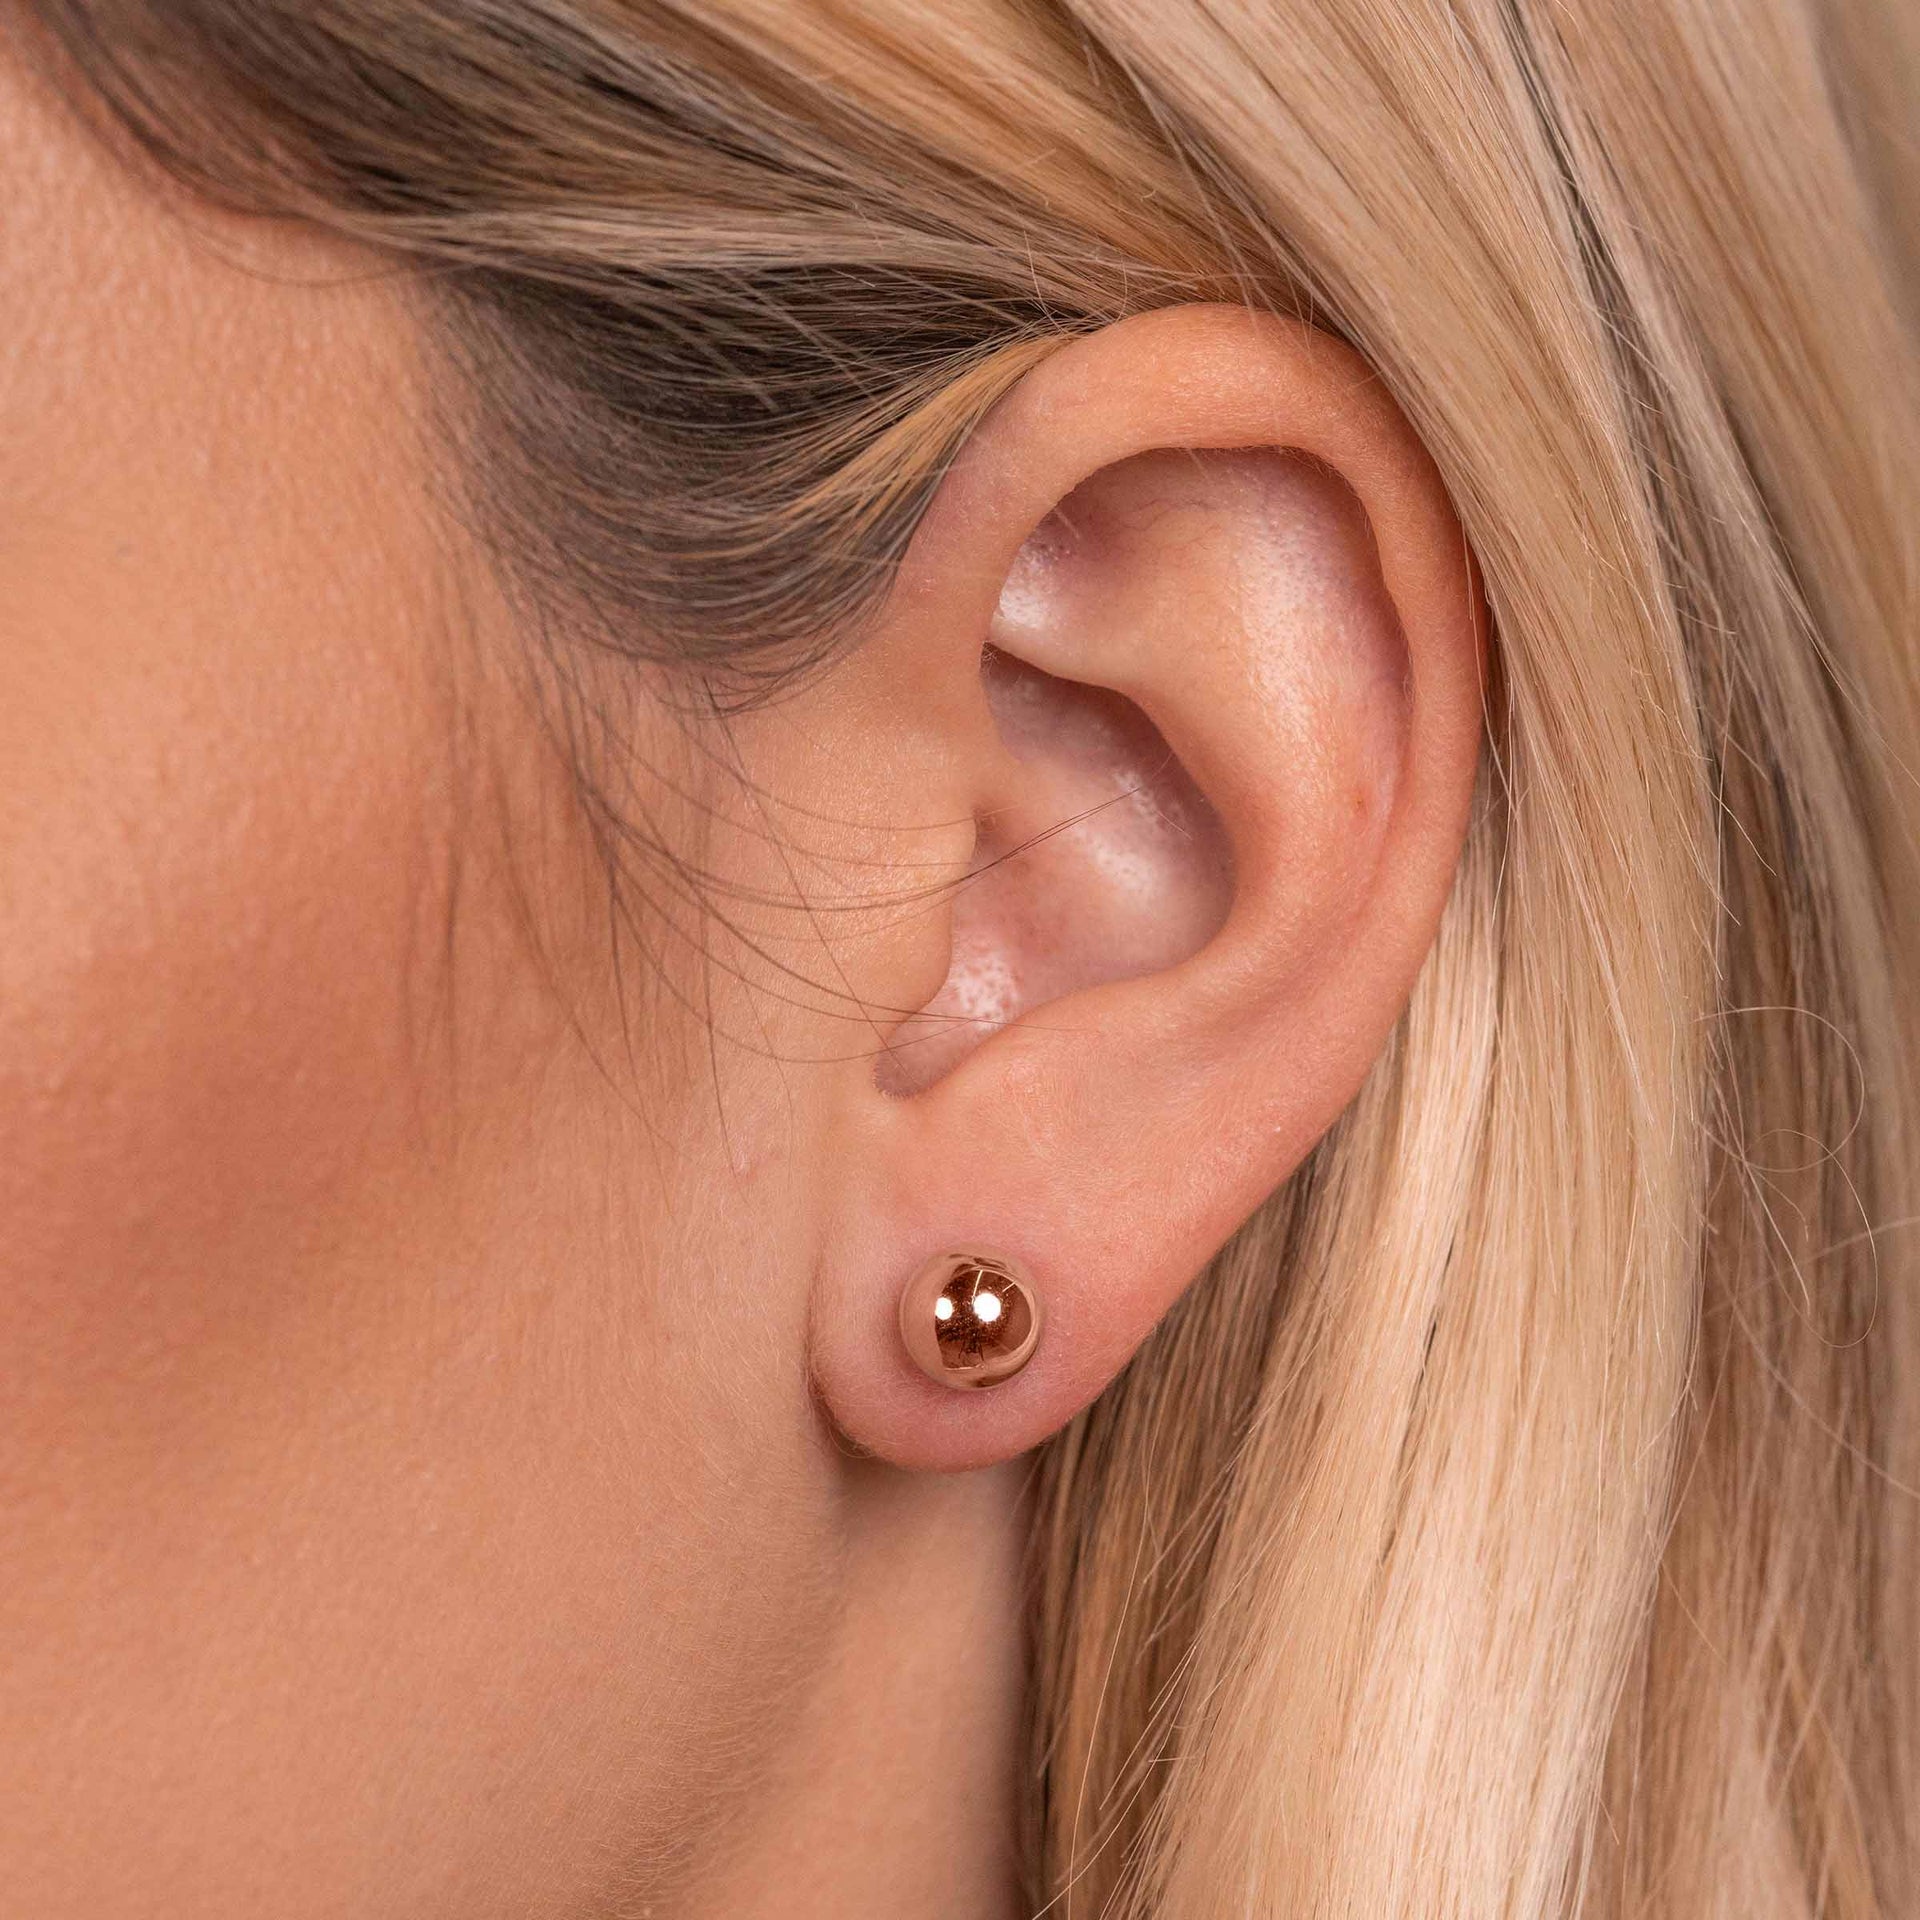 Cute rose gold ball stud earrings